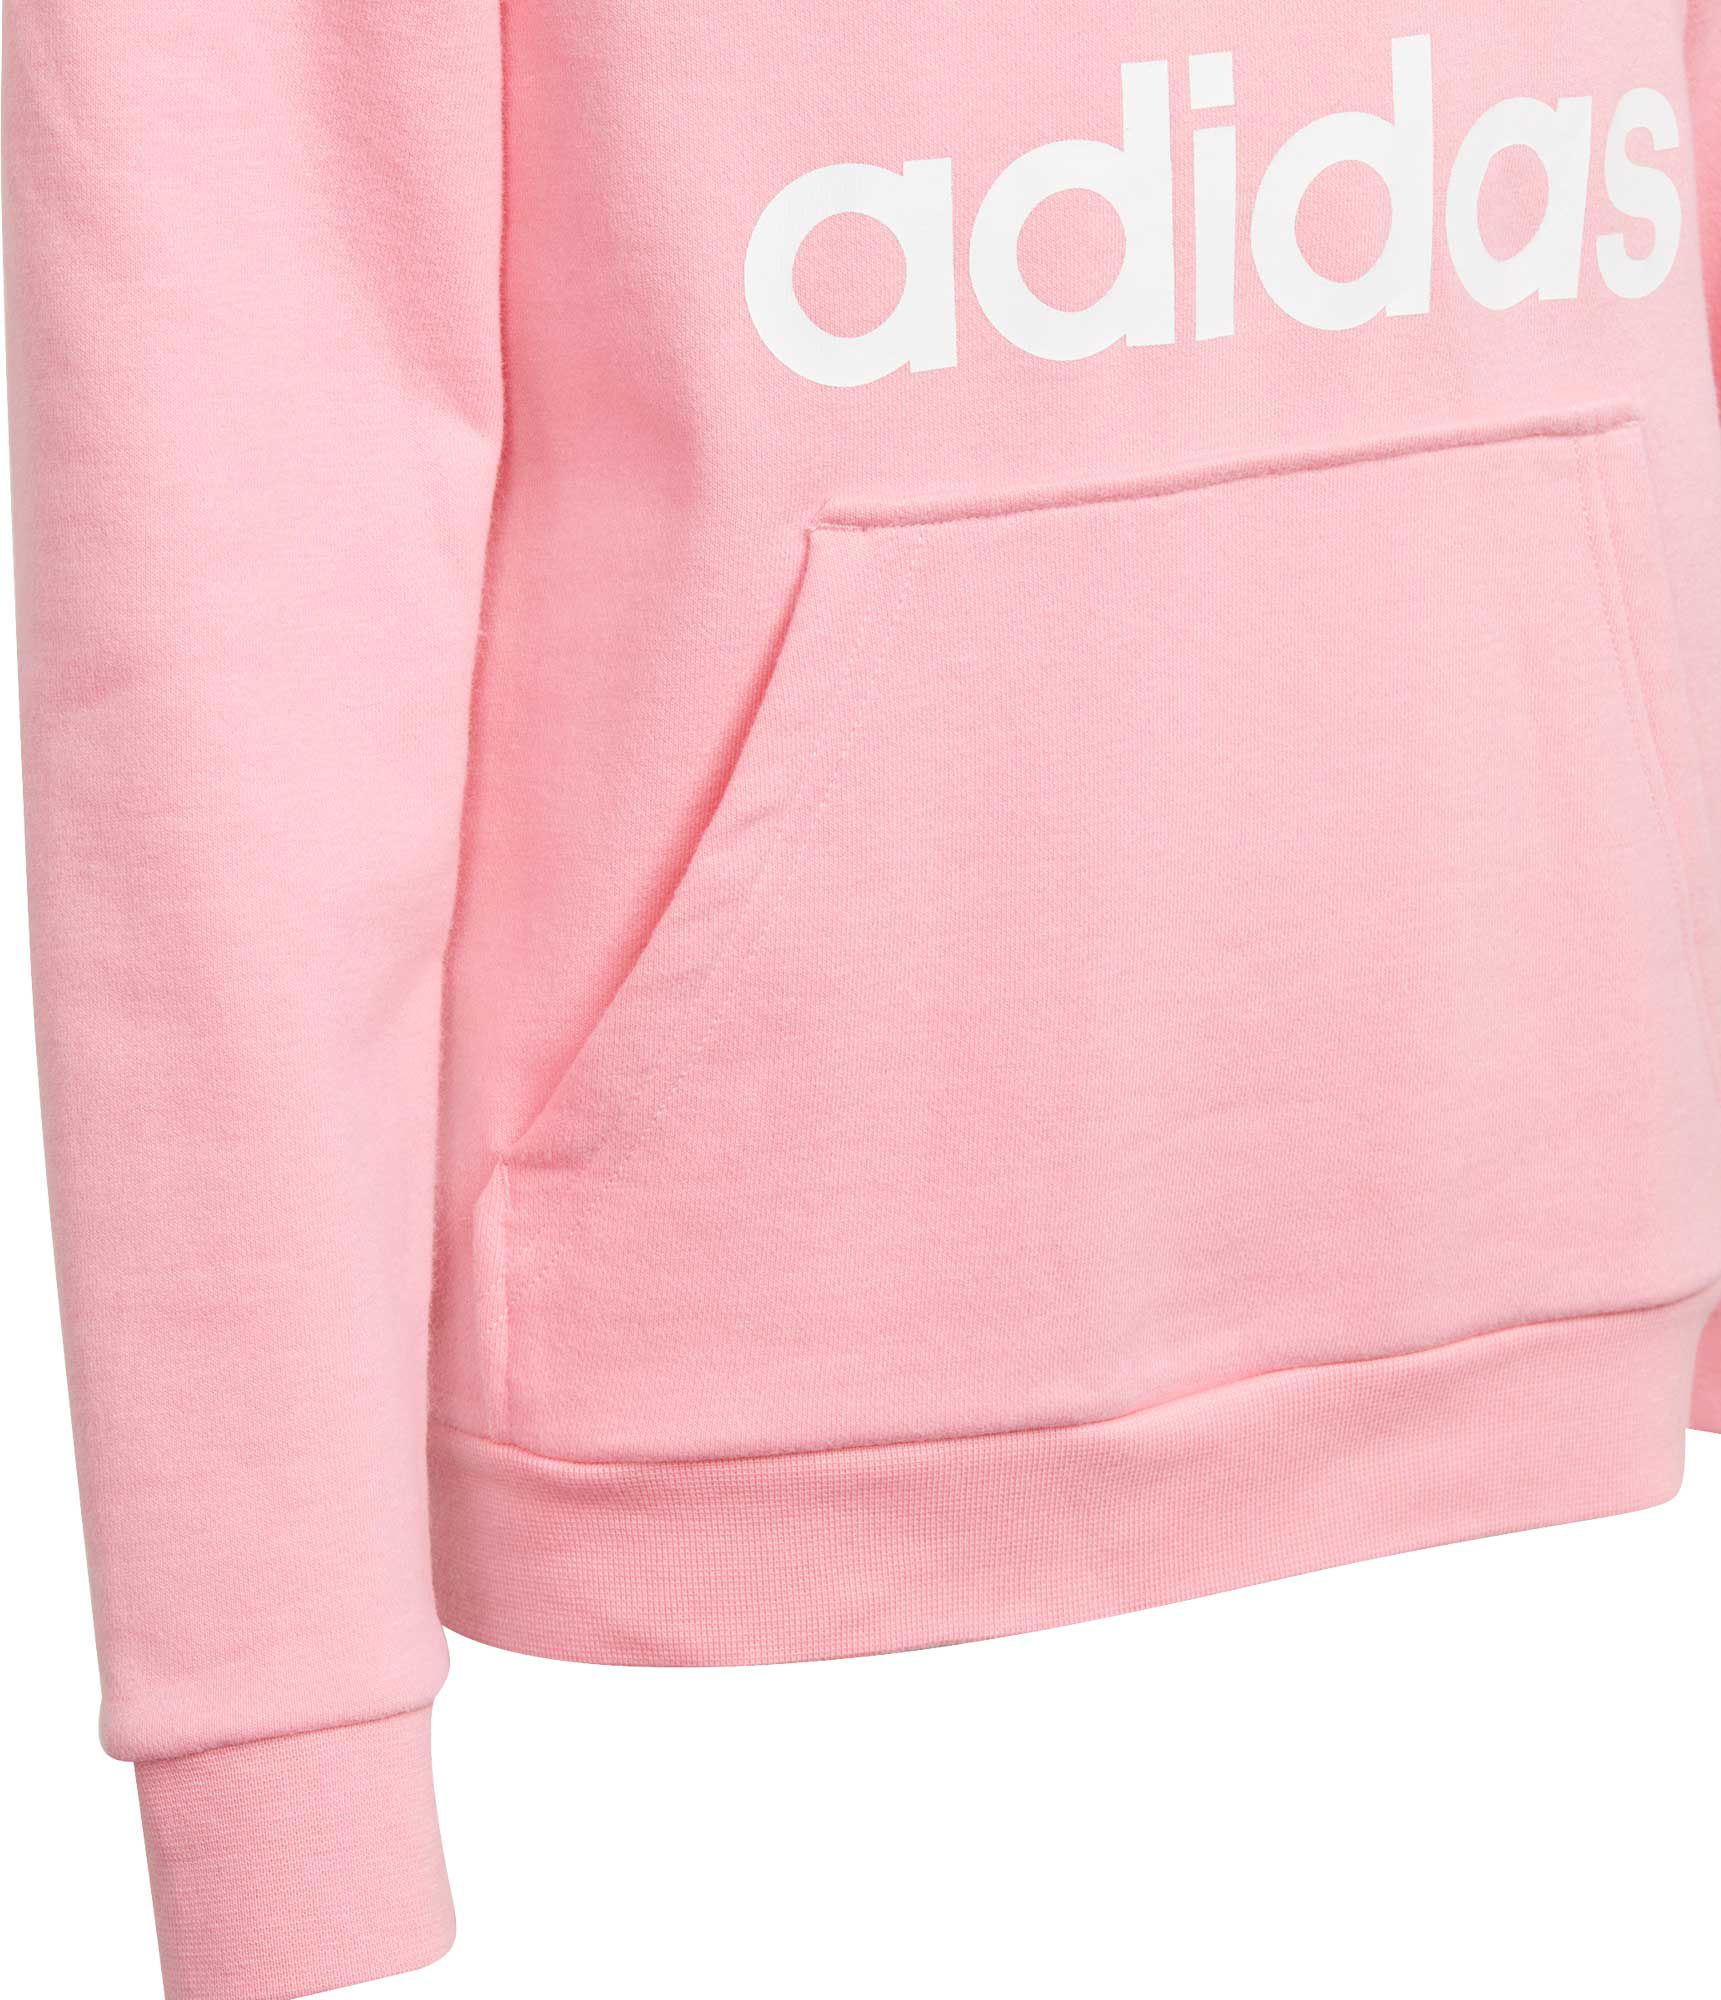 light pink adidas trefoil hoodie